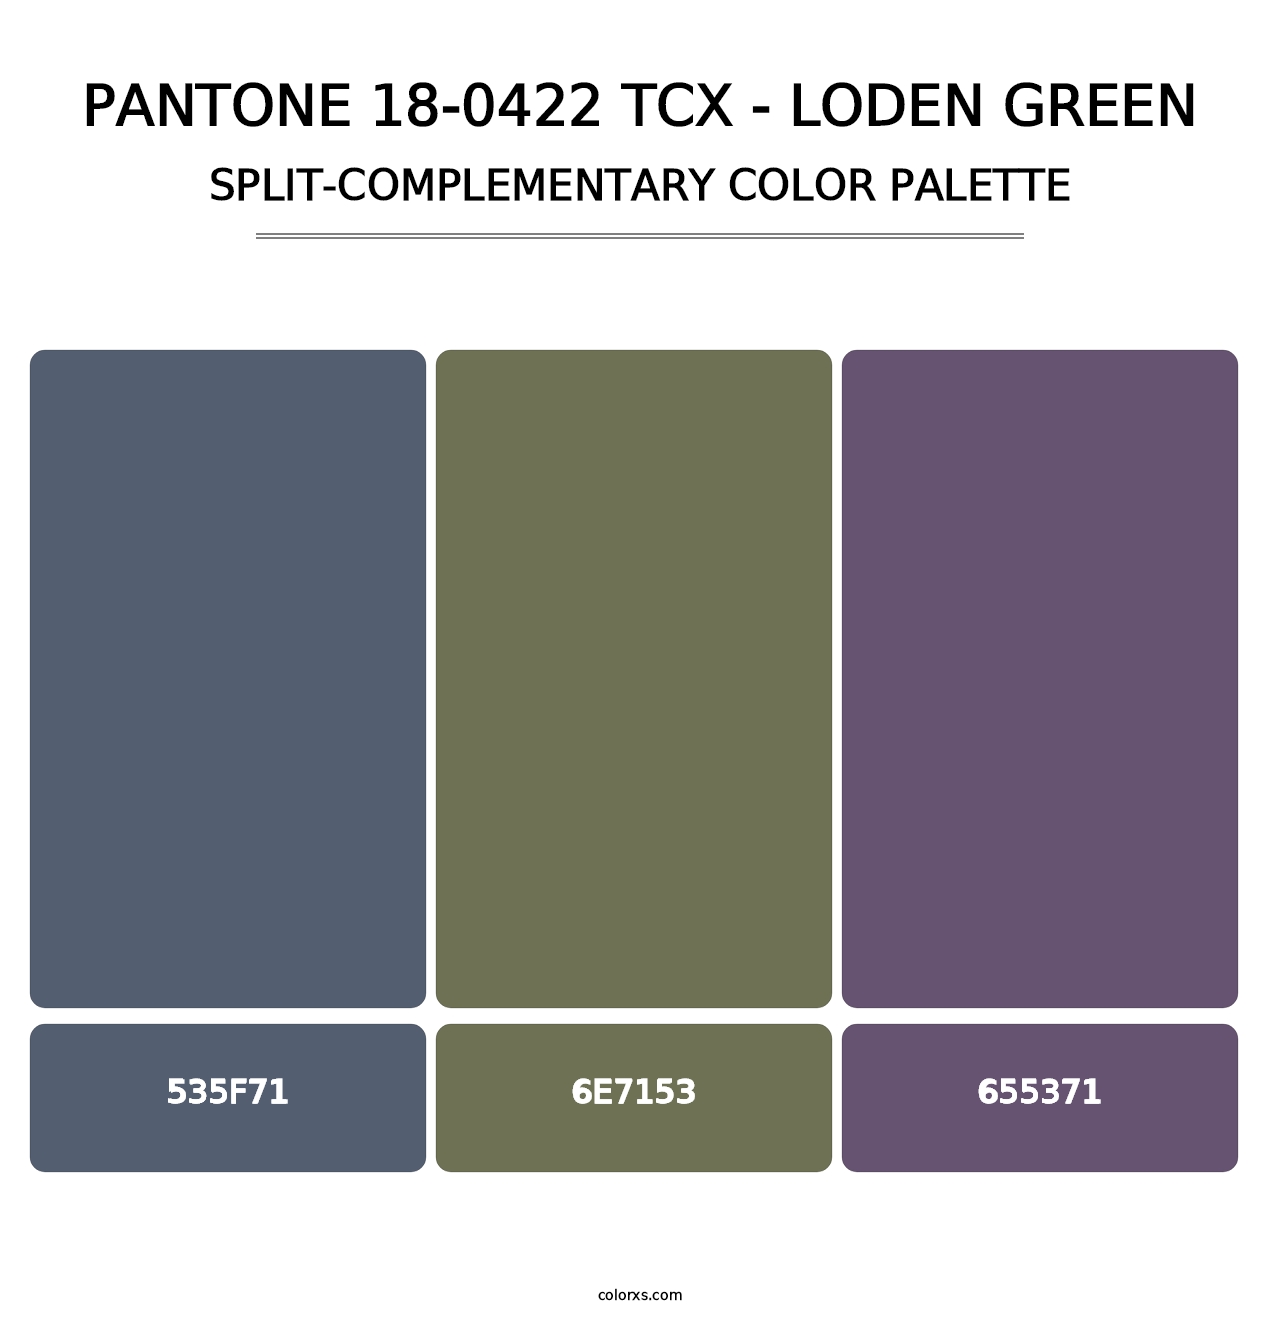 PANTONE 18-0422 TCX - Loden Green - Split-Complementary Color Palette